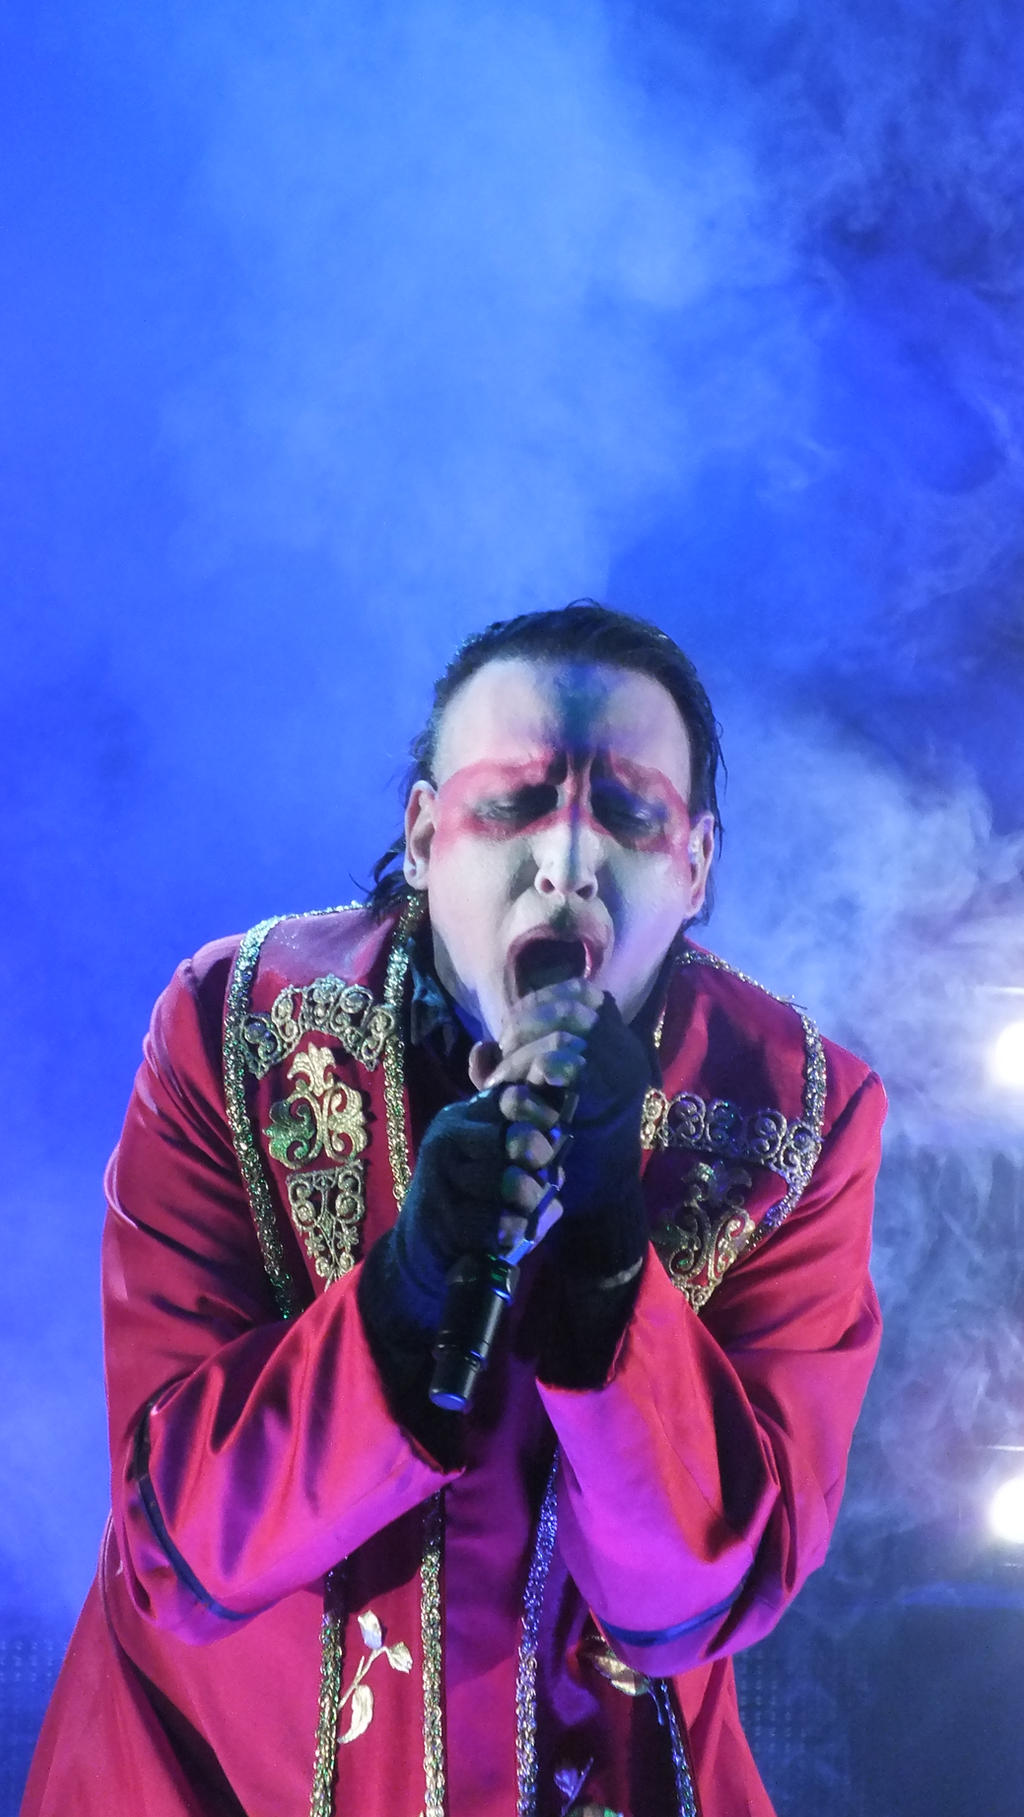 Marilyn Manson dress Pope by Rocket-Buddha on DeviantArt